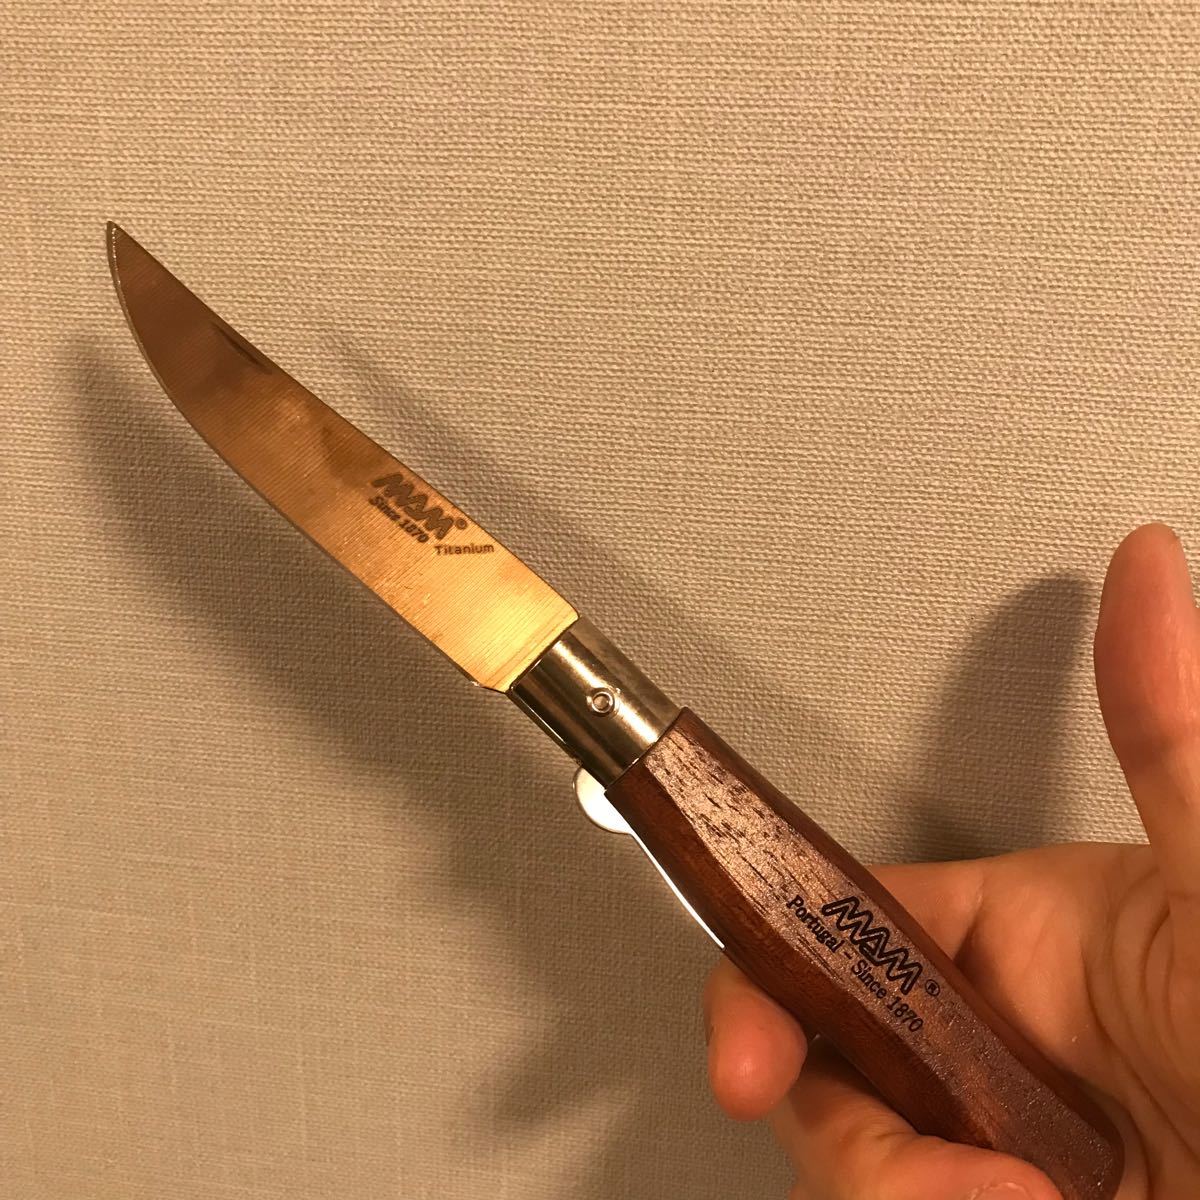 MAM マム ポケットナイフ チタン フォールディングナイフ 折り畳みナイフ 145周年記念モデル